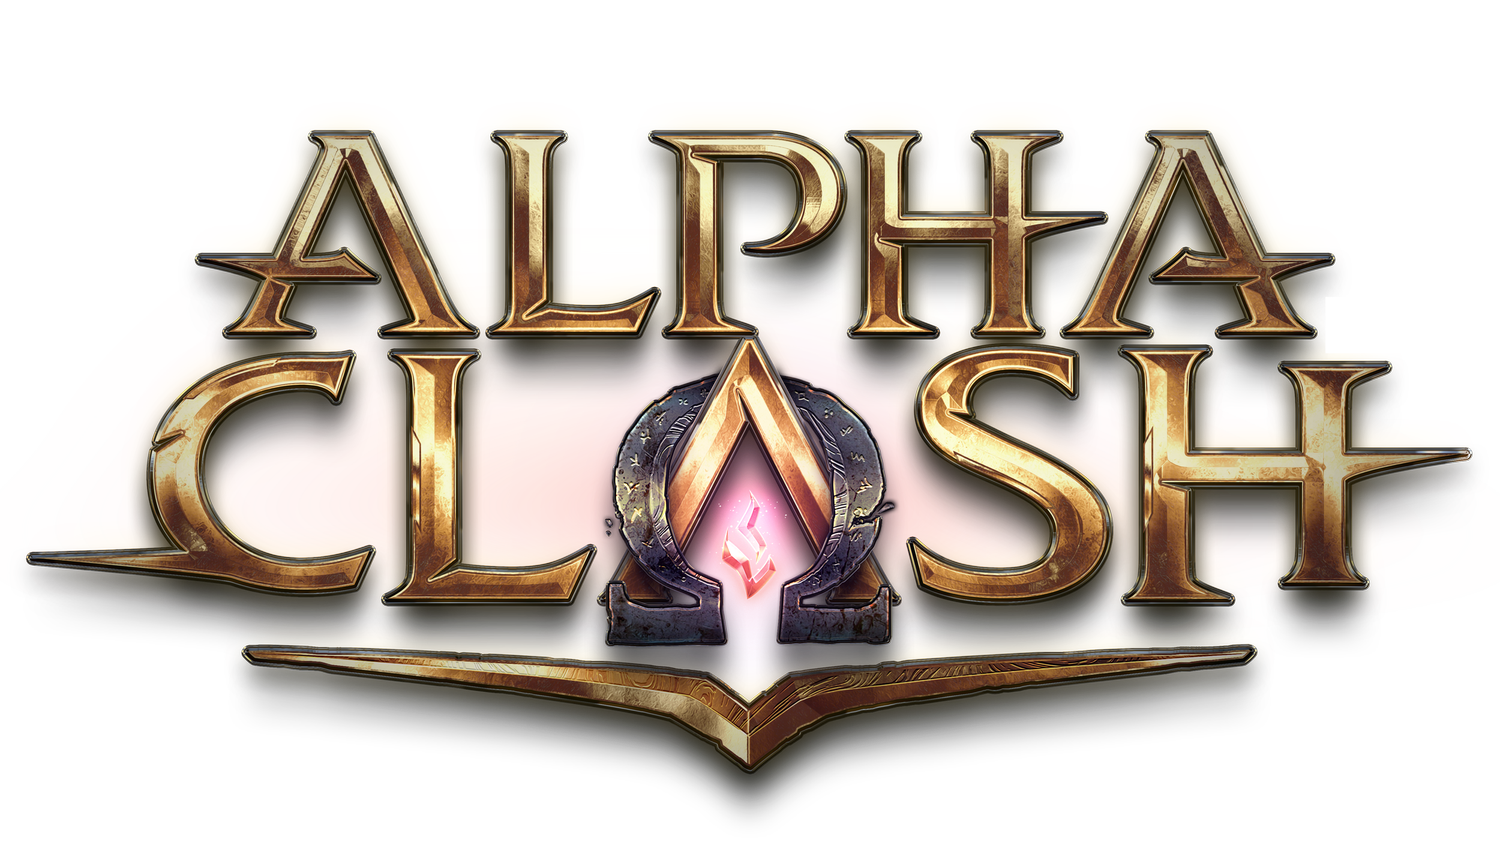 Alpha Clash